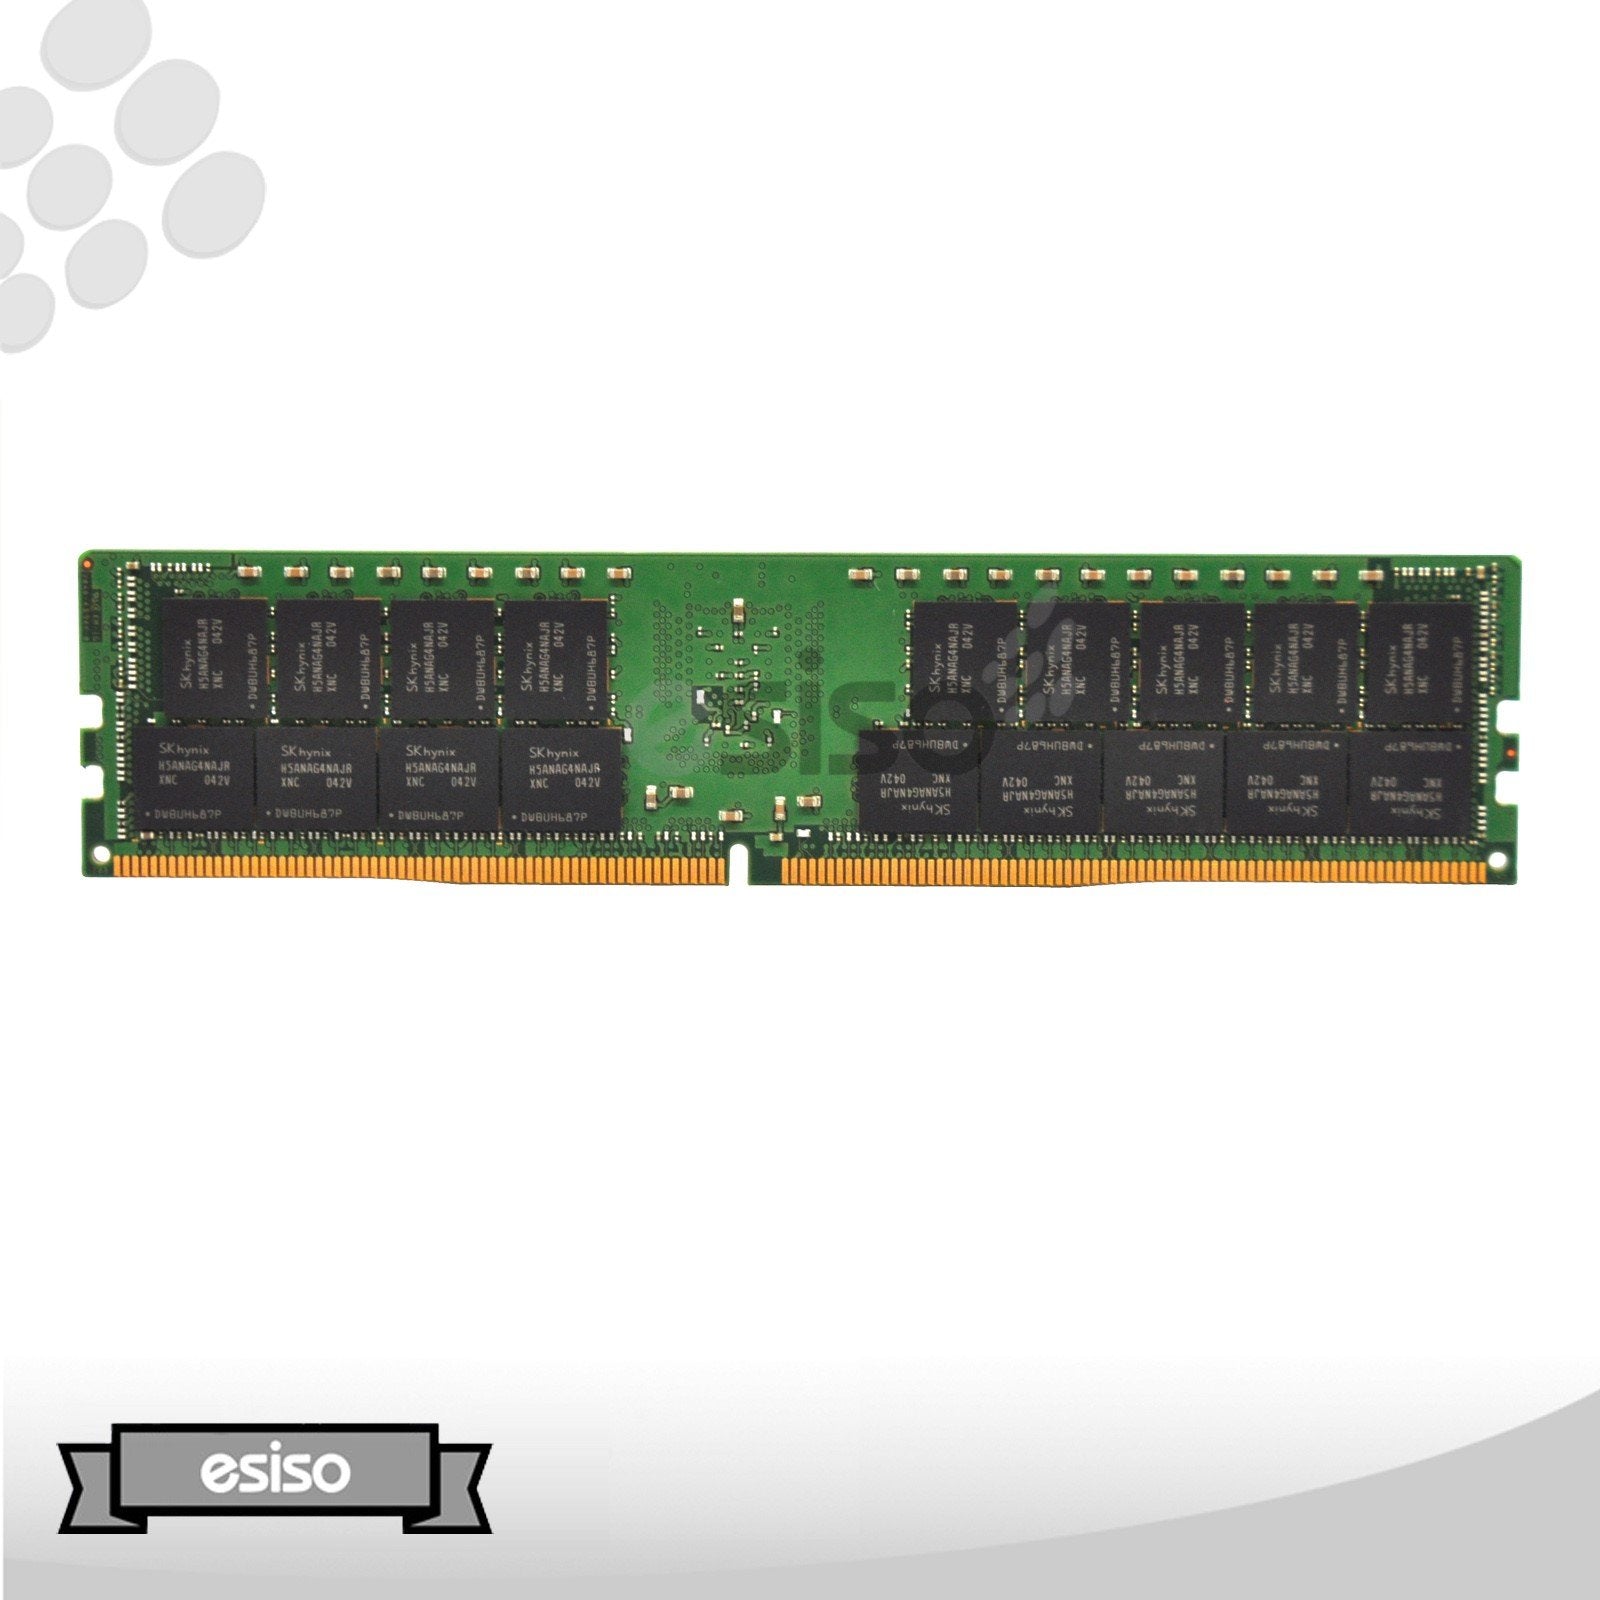 HMAA8GR7AJR4N-XN HYNIX 64GB 2RX4 PC4-3200AA DDR4 MEMORY MODULE (1x64GB)